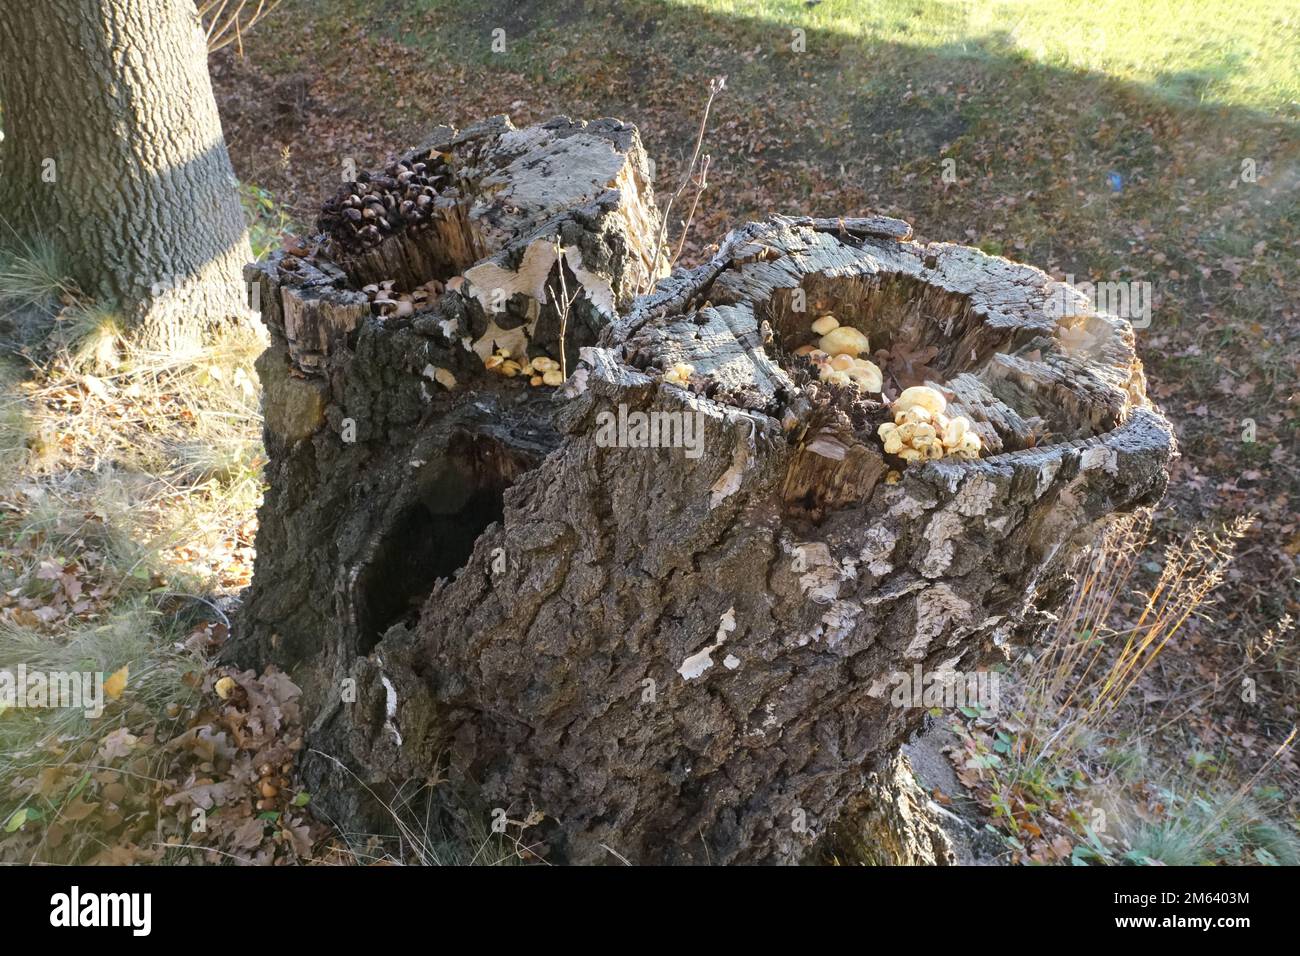 Pilzgruppe im abgestorbenen Baumstumpf Stock Photo